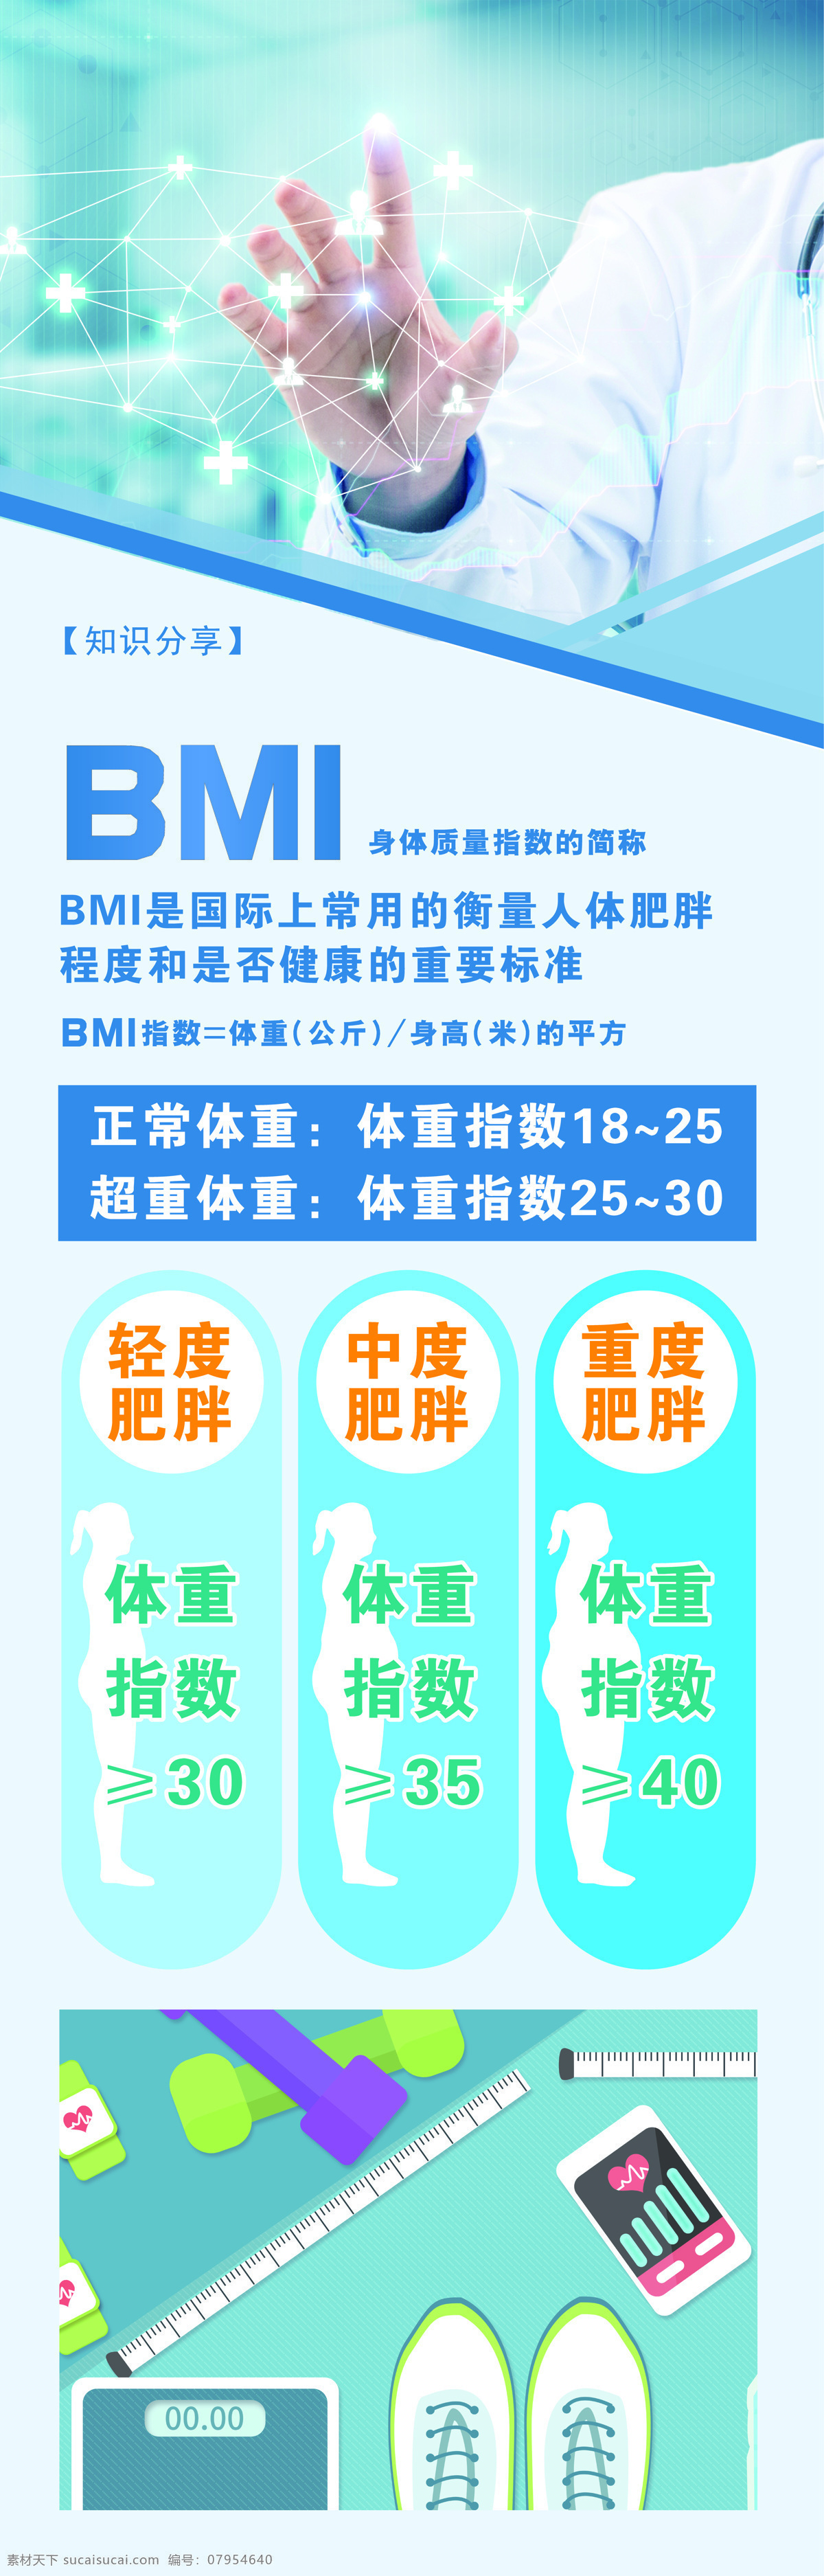 bmi体重 亚洲体重 成年体重 体重表 标准体重 男女体重 美容美体 体重对照表 bmi对照表 成年居民体重 标准体重对照 身高对照表 底纹边框 背景底纹